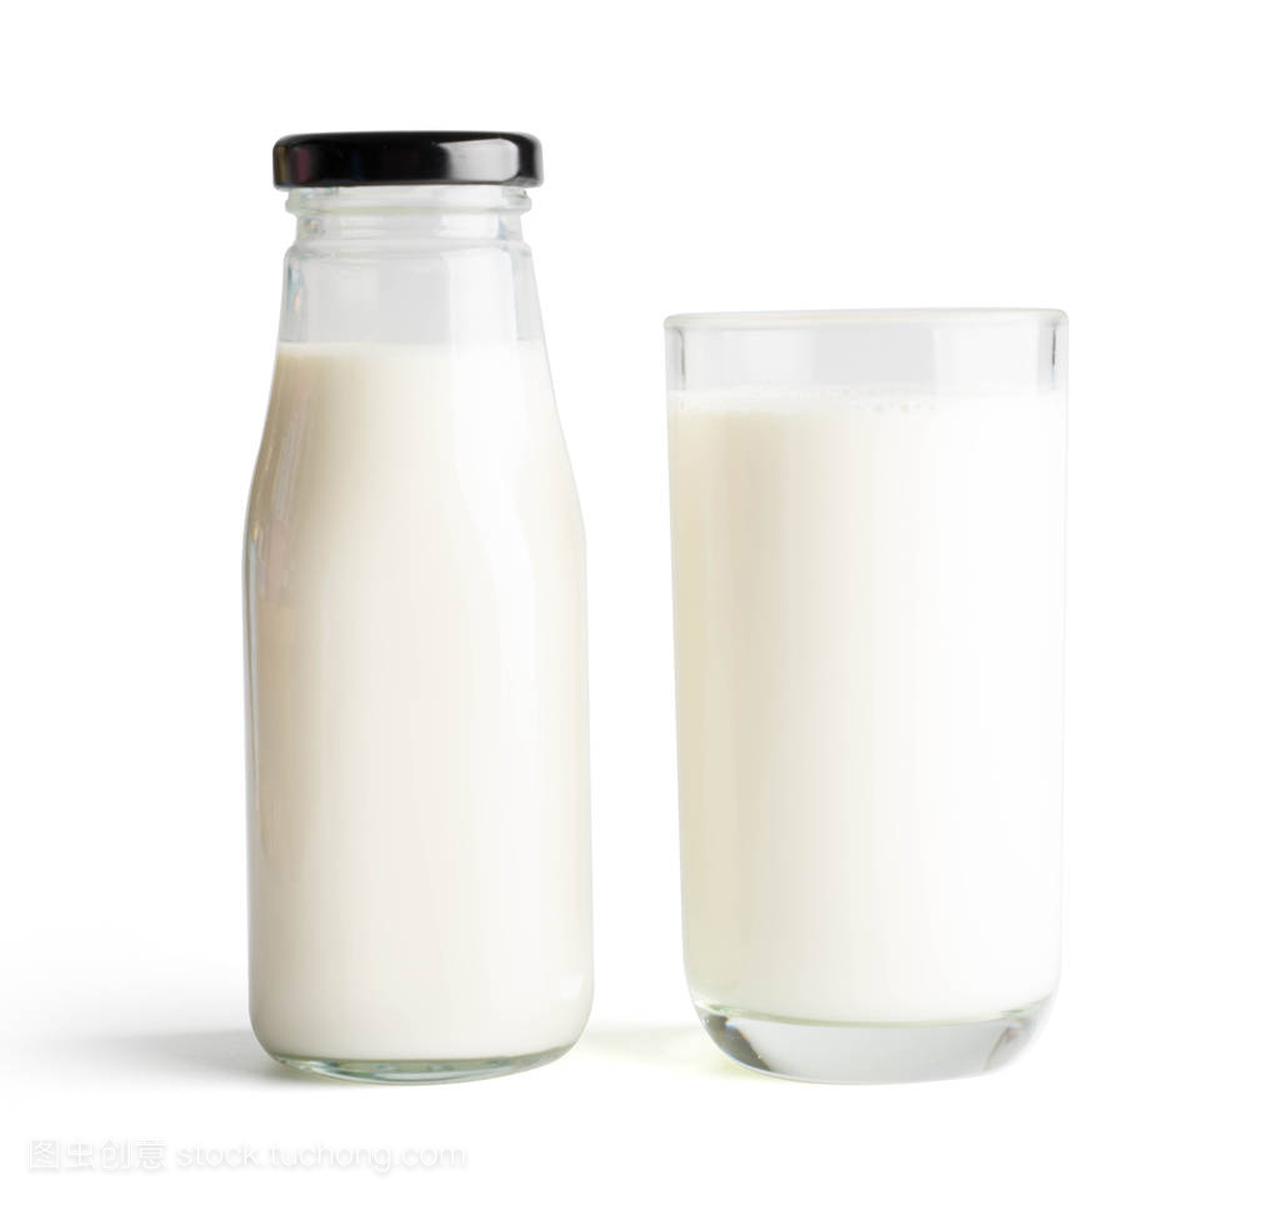 Milk bottle and milk glass on white background